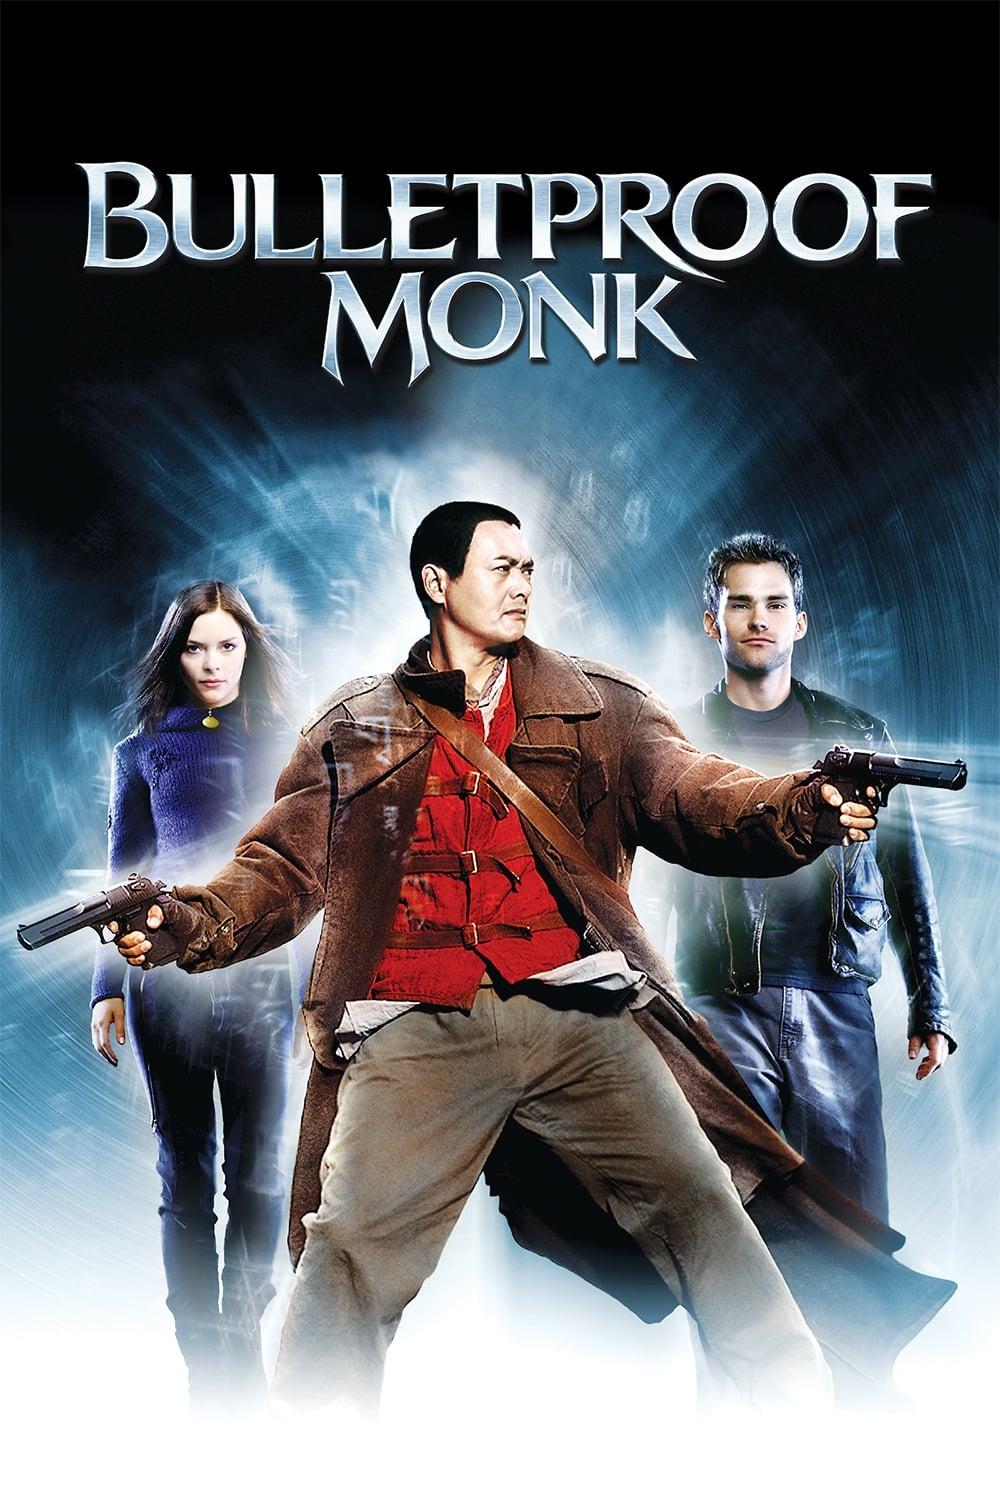 Bulletproof Monk - Der kugelsichere Mönch poster